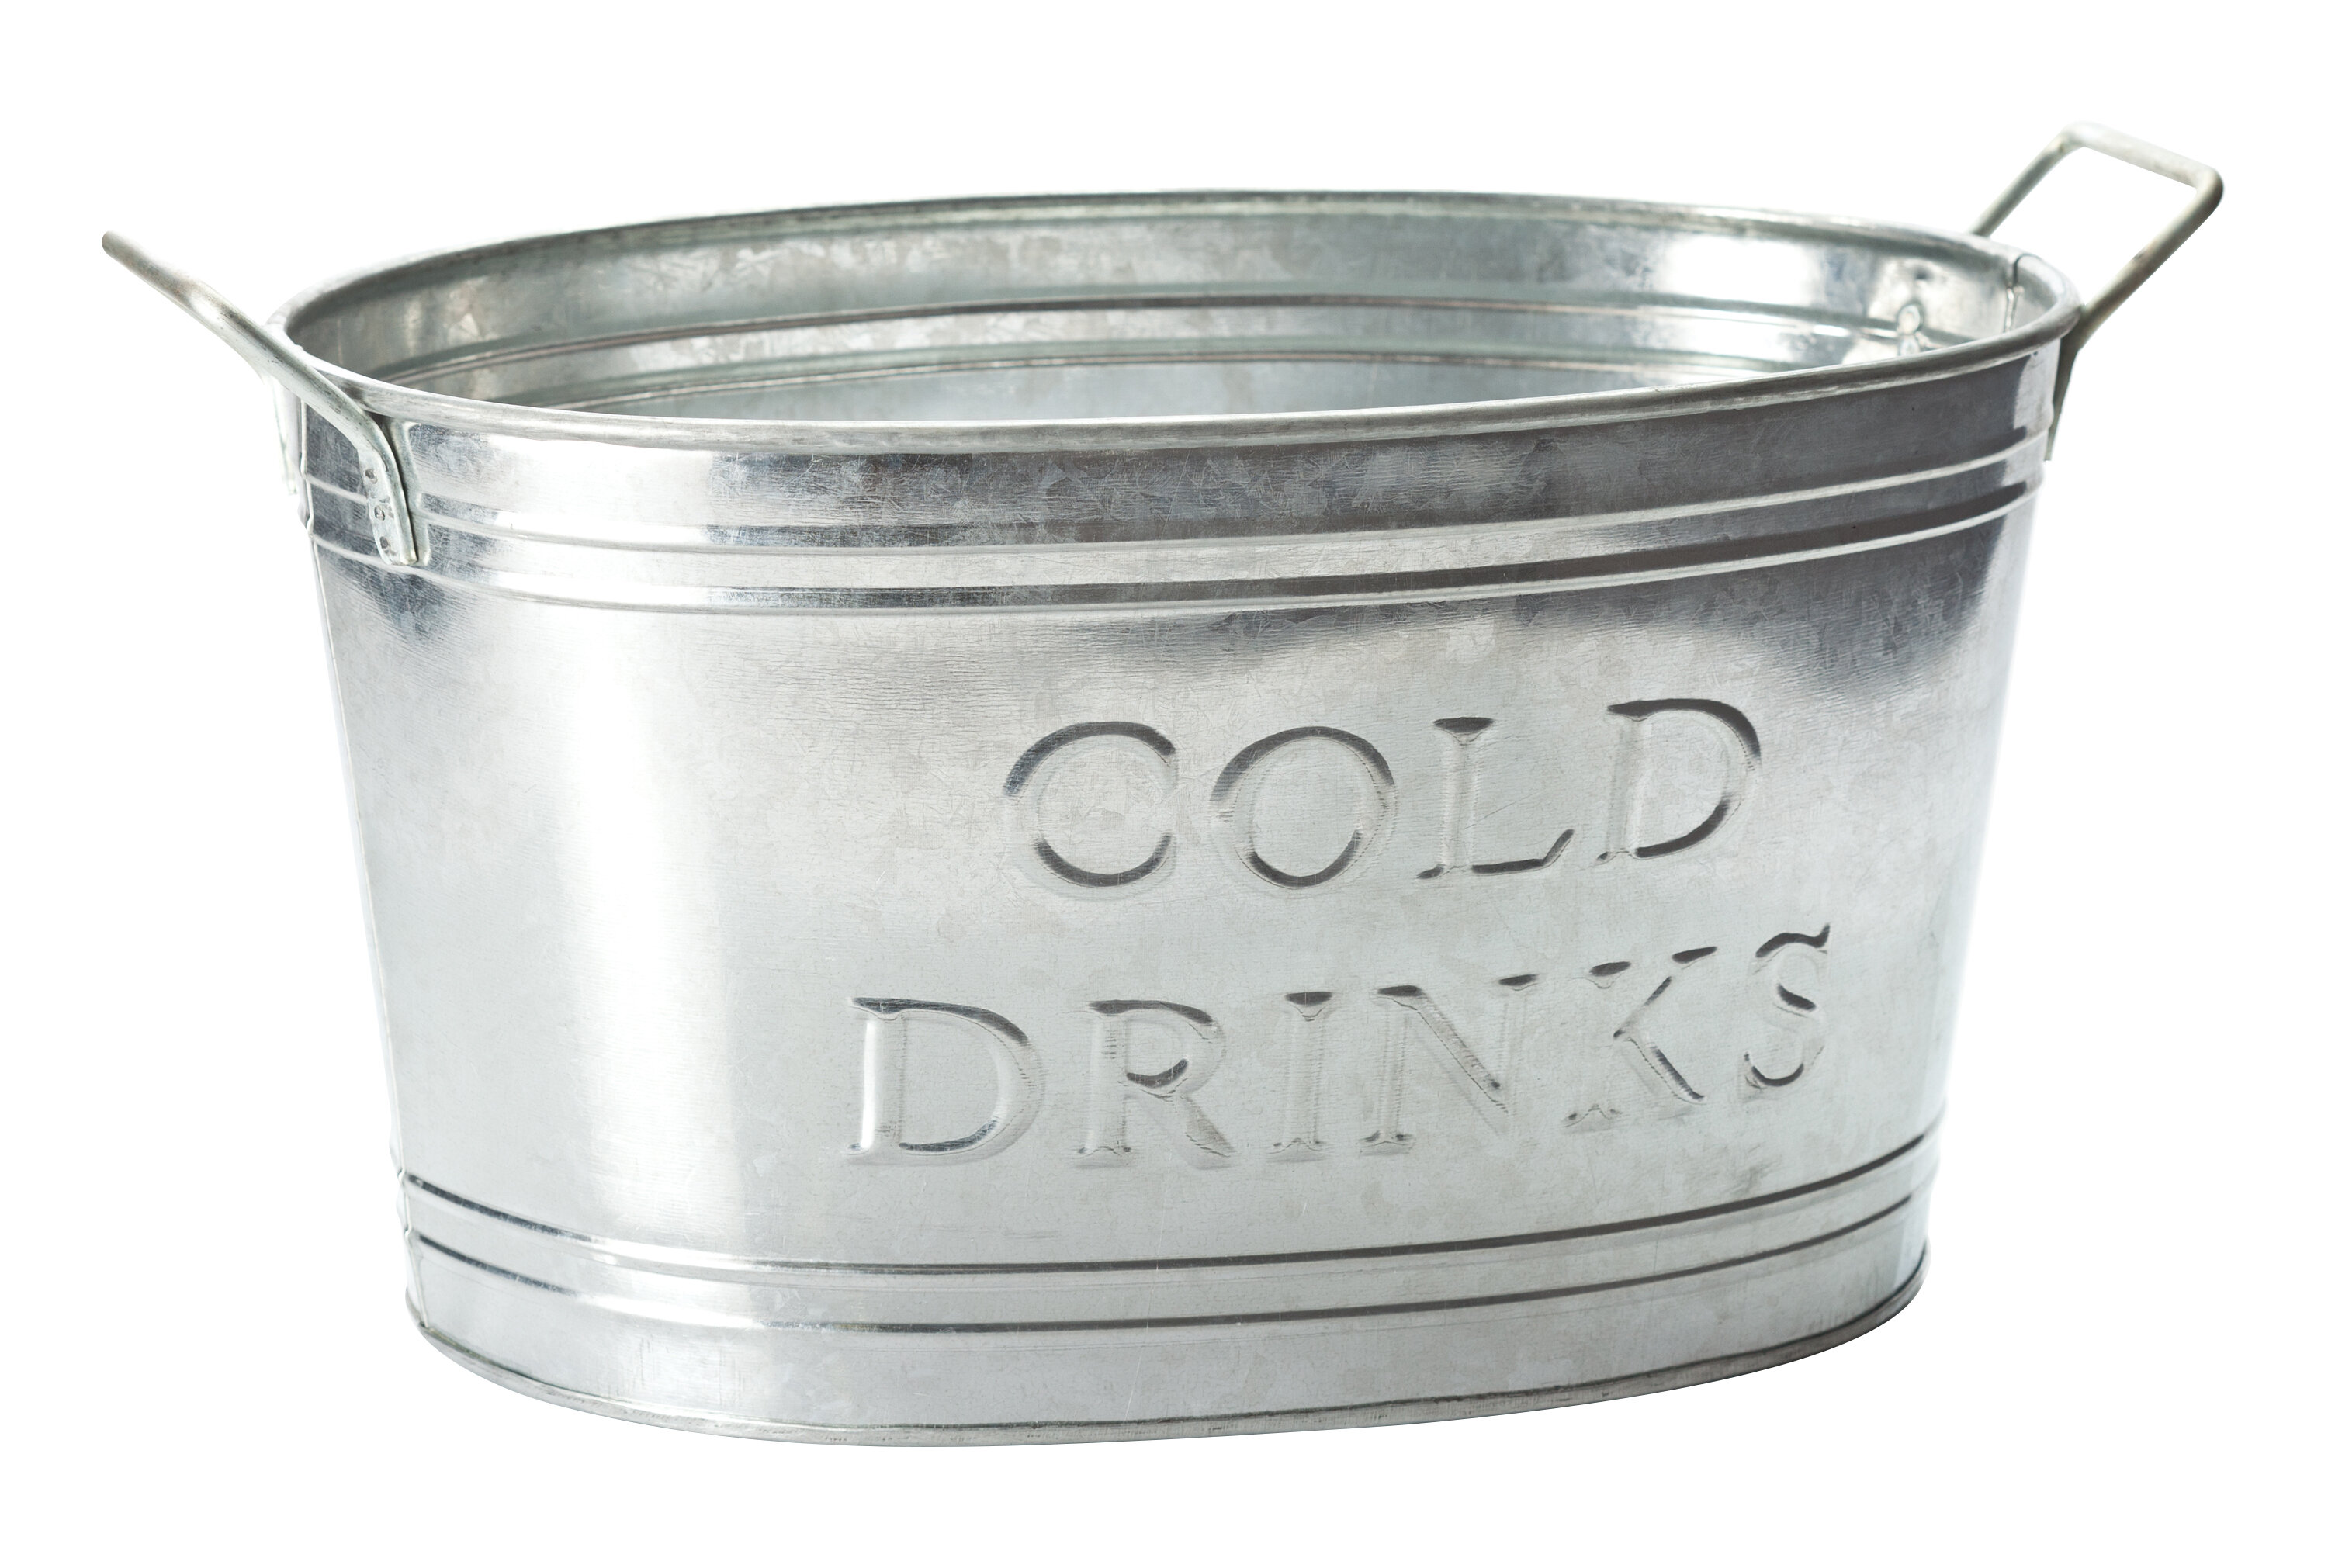 Snediker Galvanized Cold Drinks Oval Tub